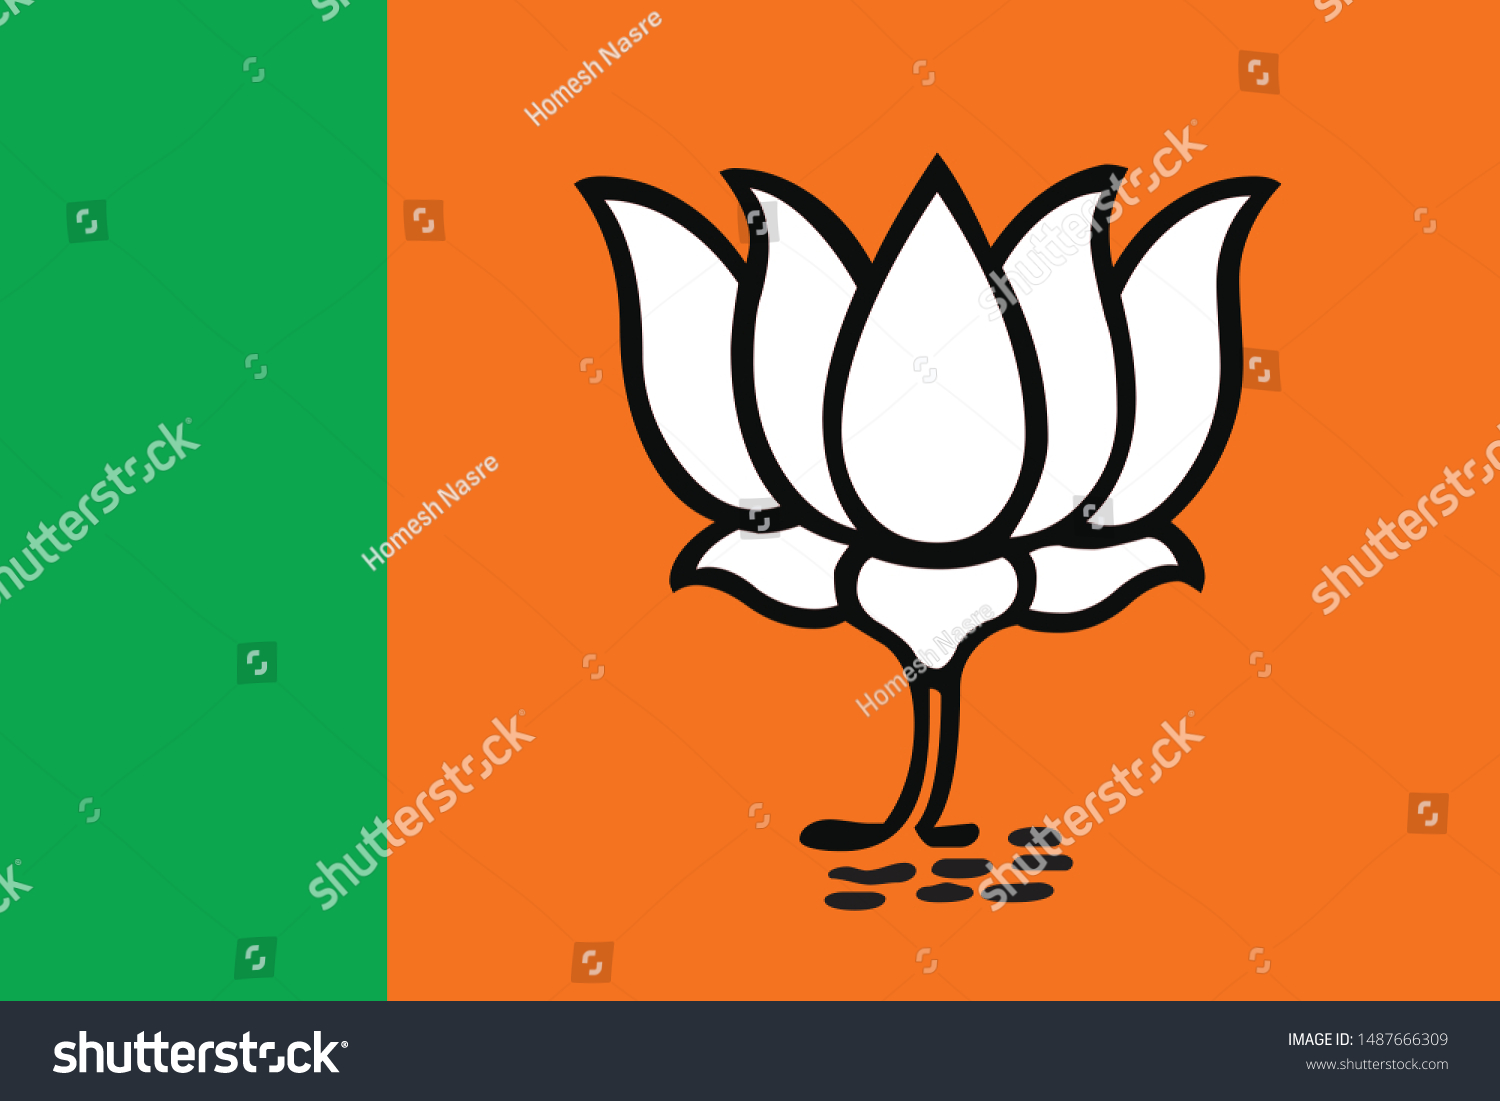 SVG of flag of bhartiya janata party svg